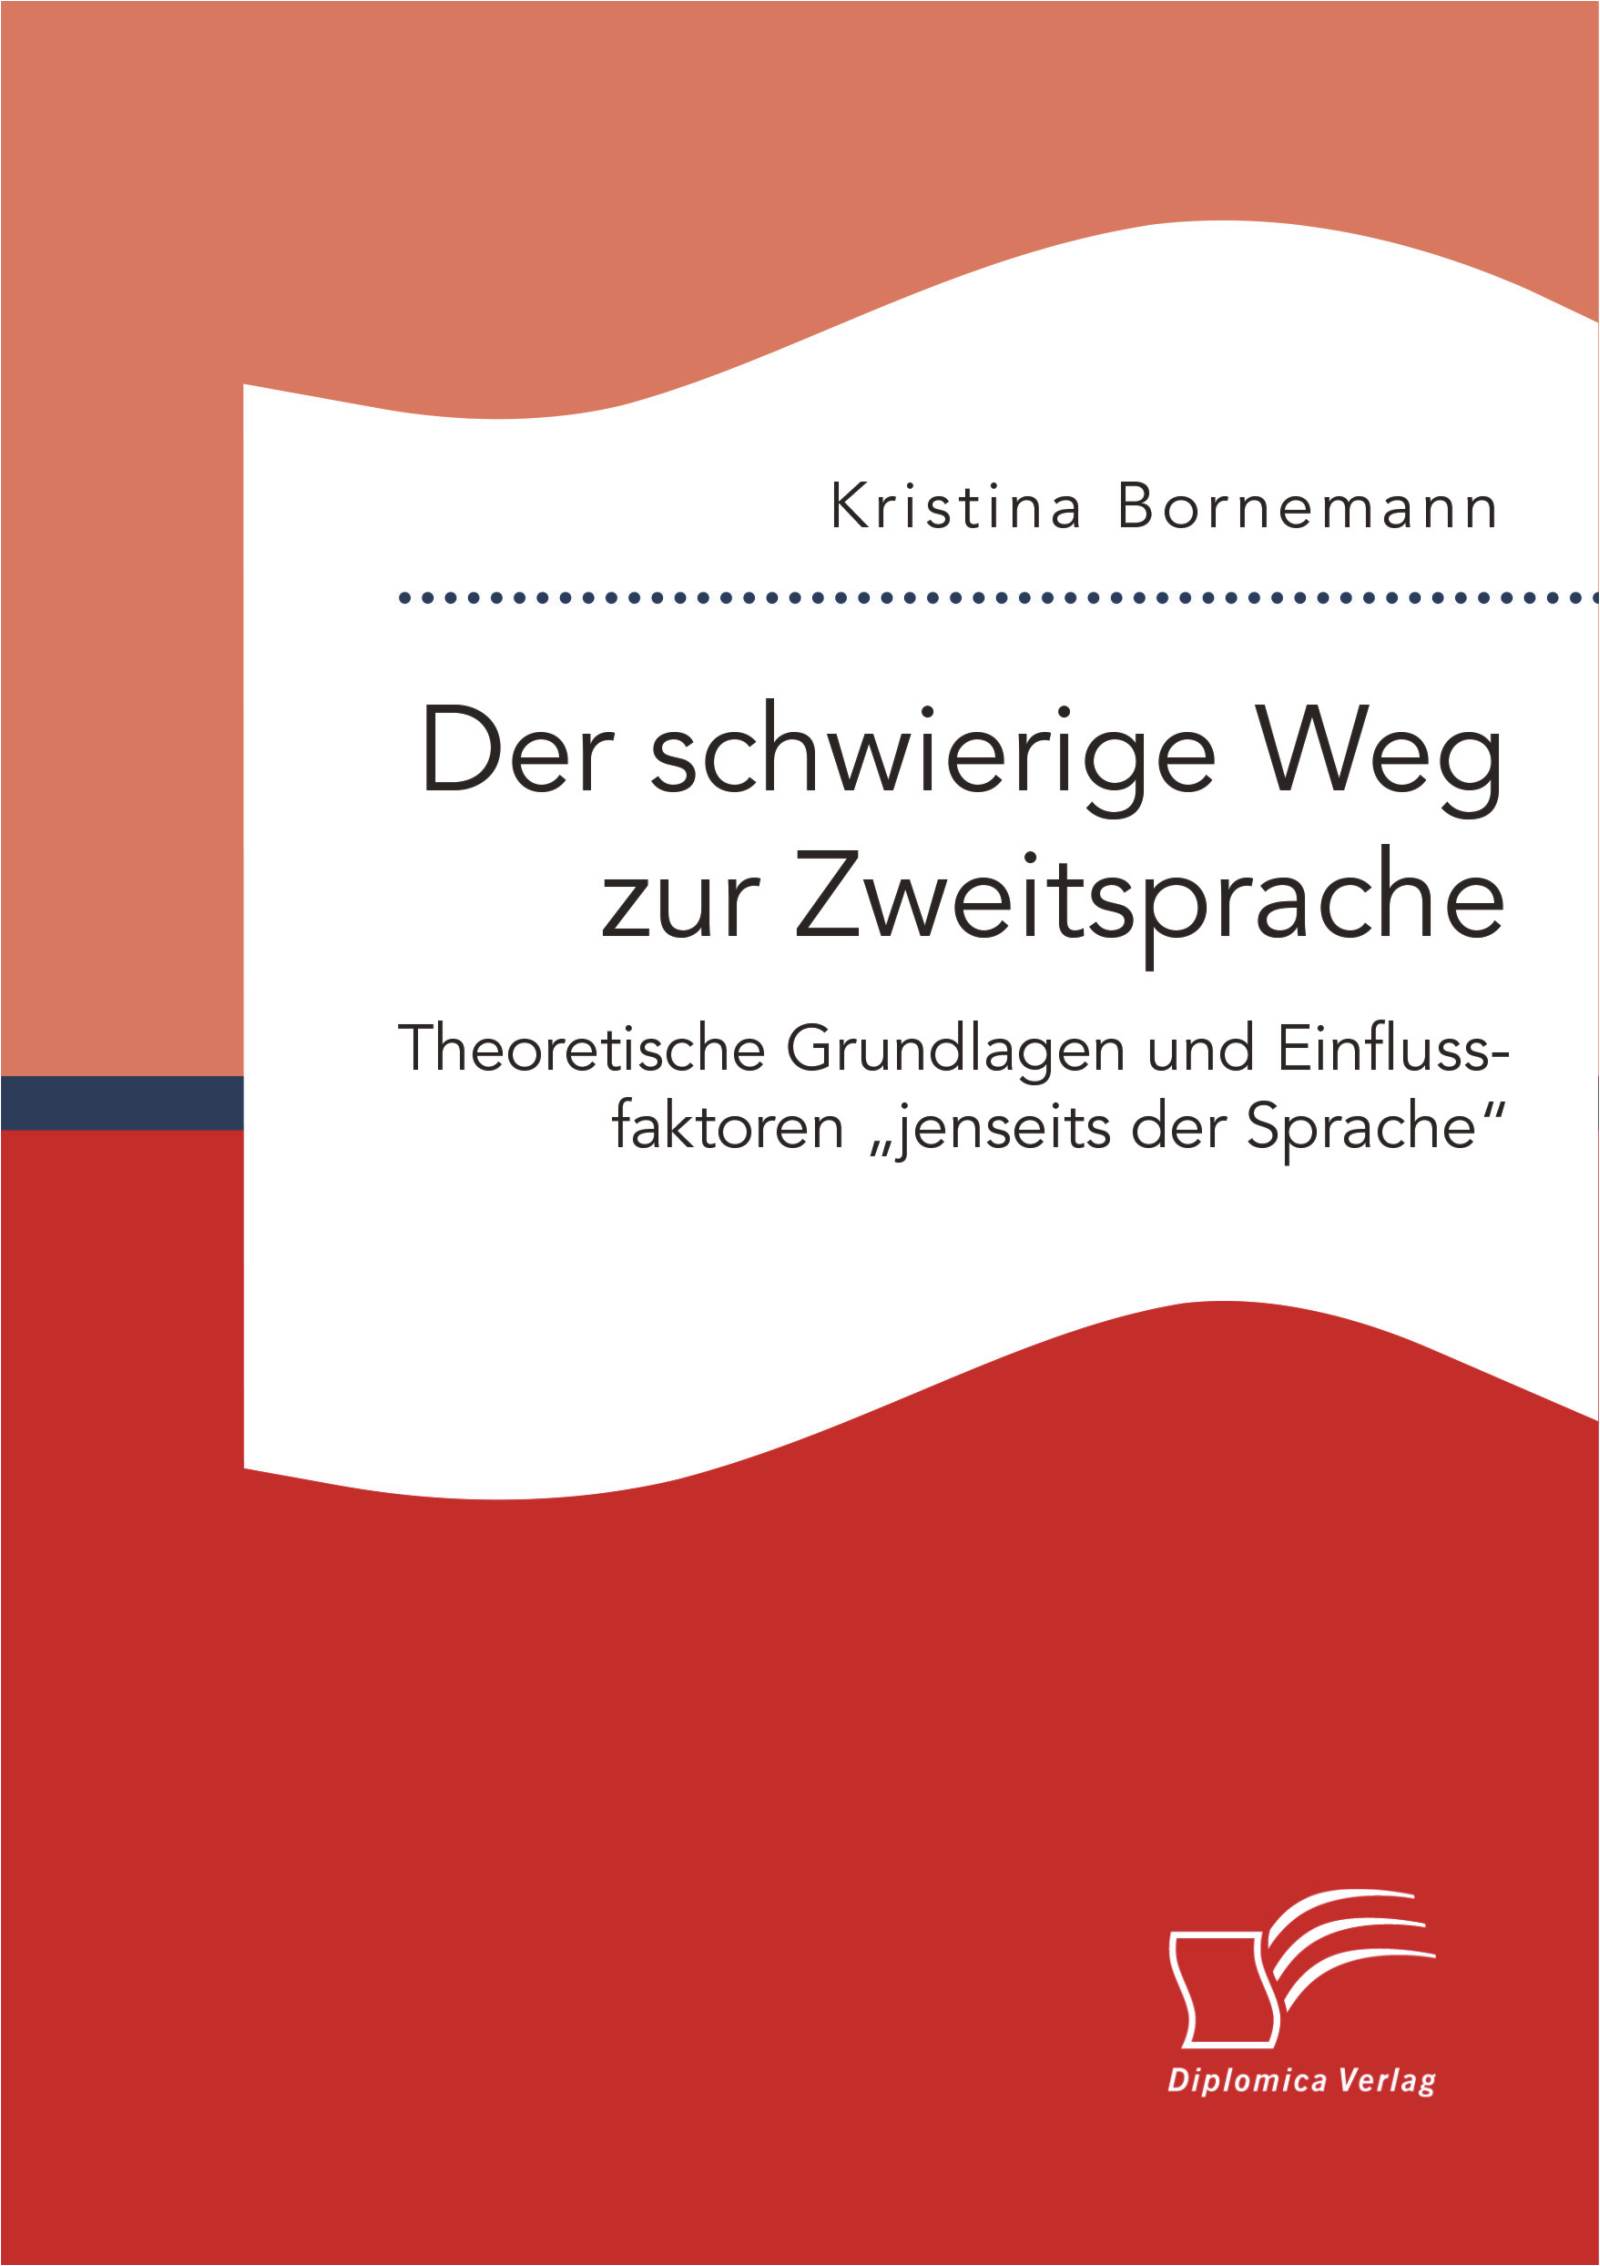 book erkenntnis